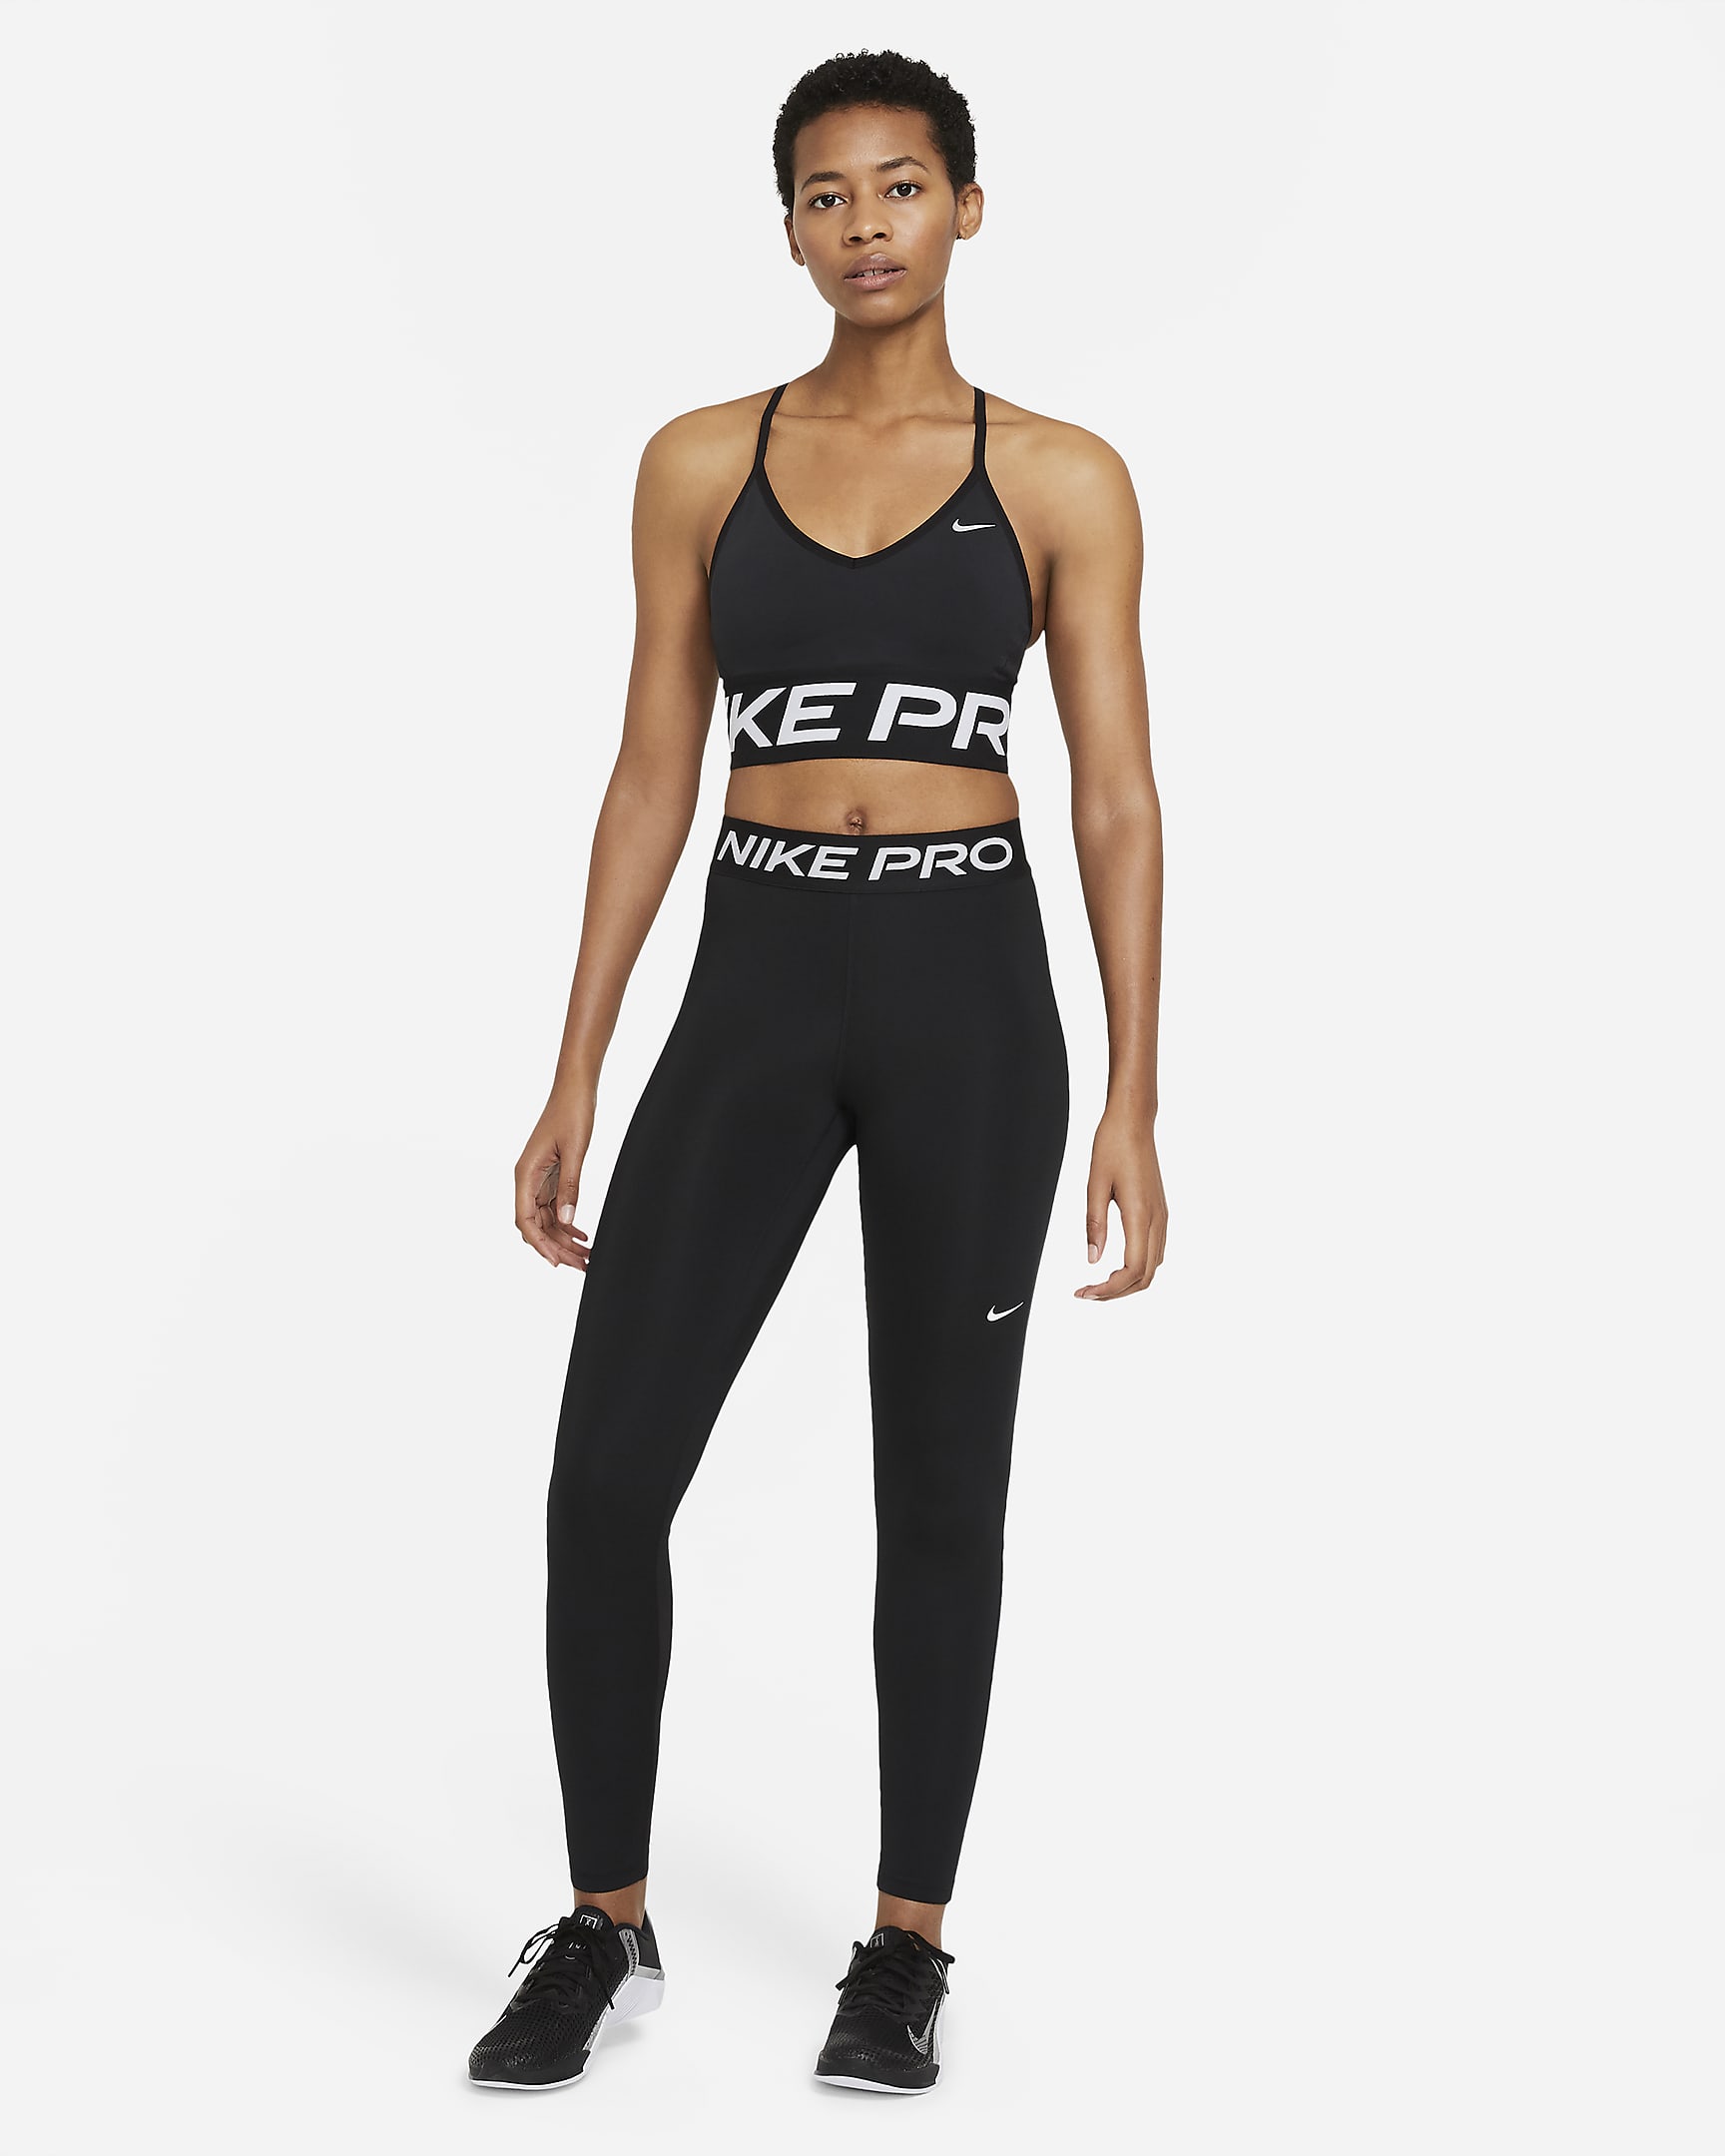 Nike Pro-leggings med mesh-paneler og mellemhøj talje til kvinder - sort/hvid